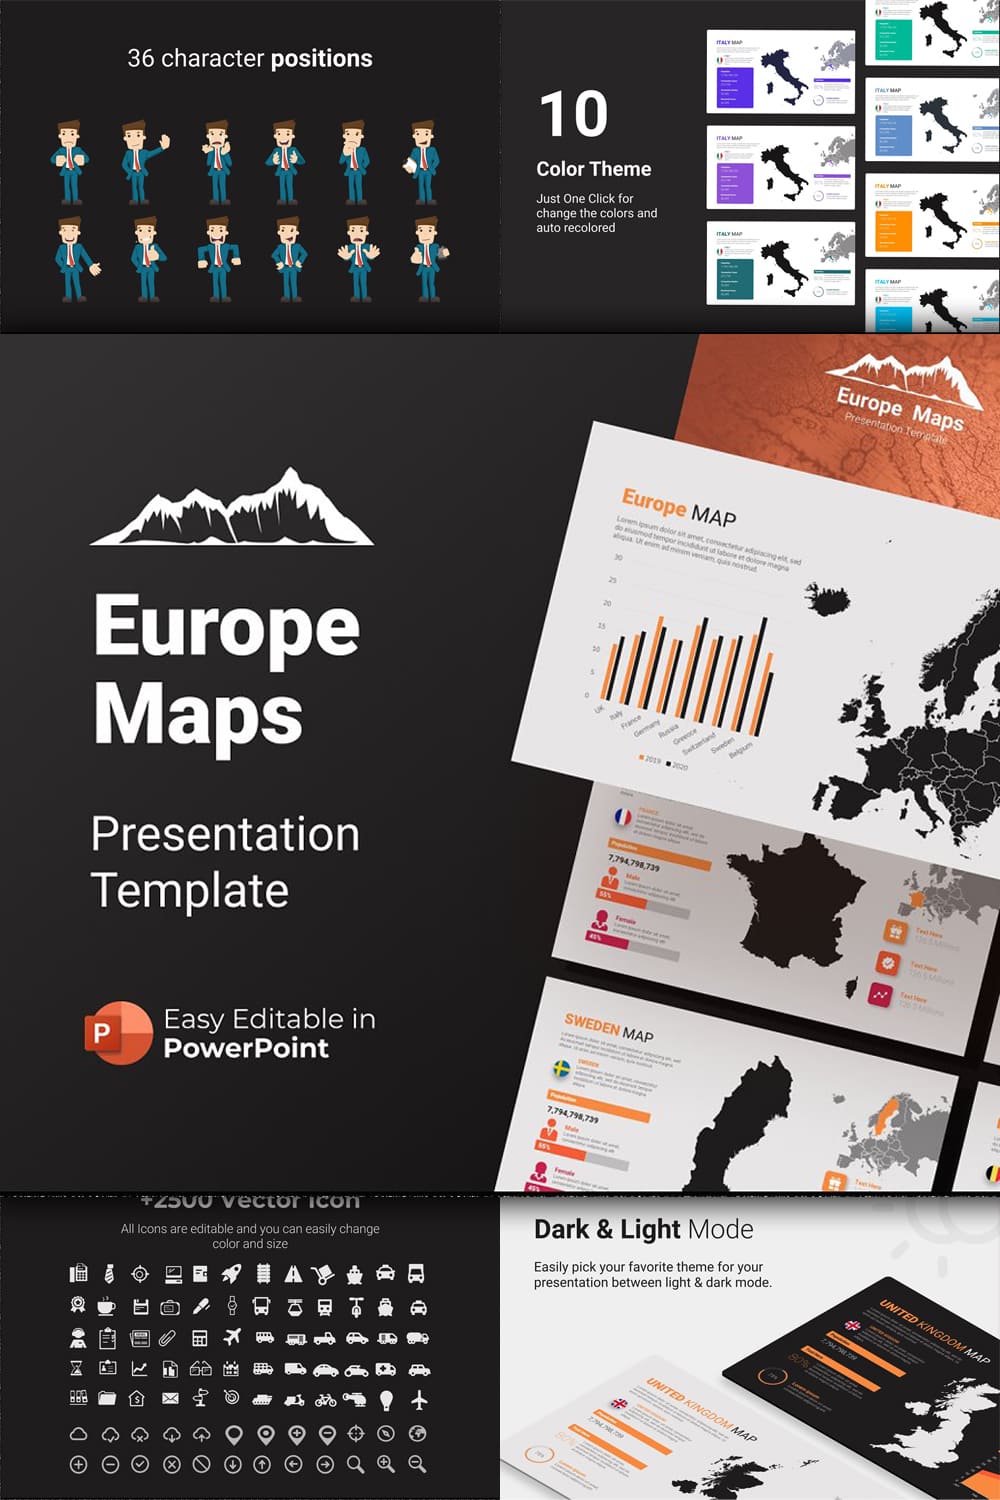 Europe Maps PPTX Template pinterest image.